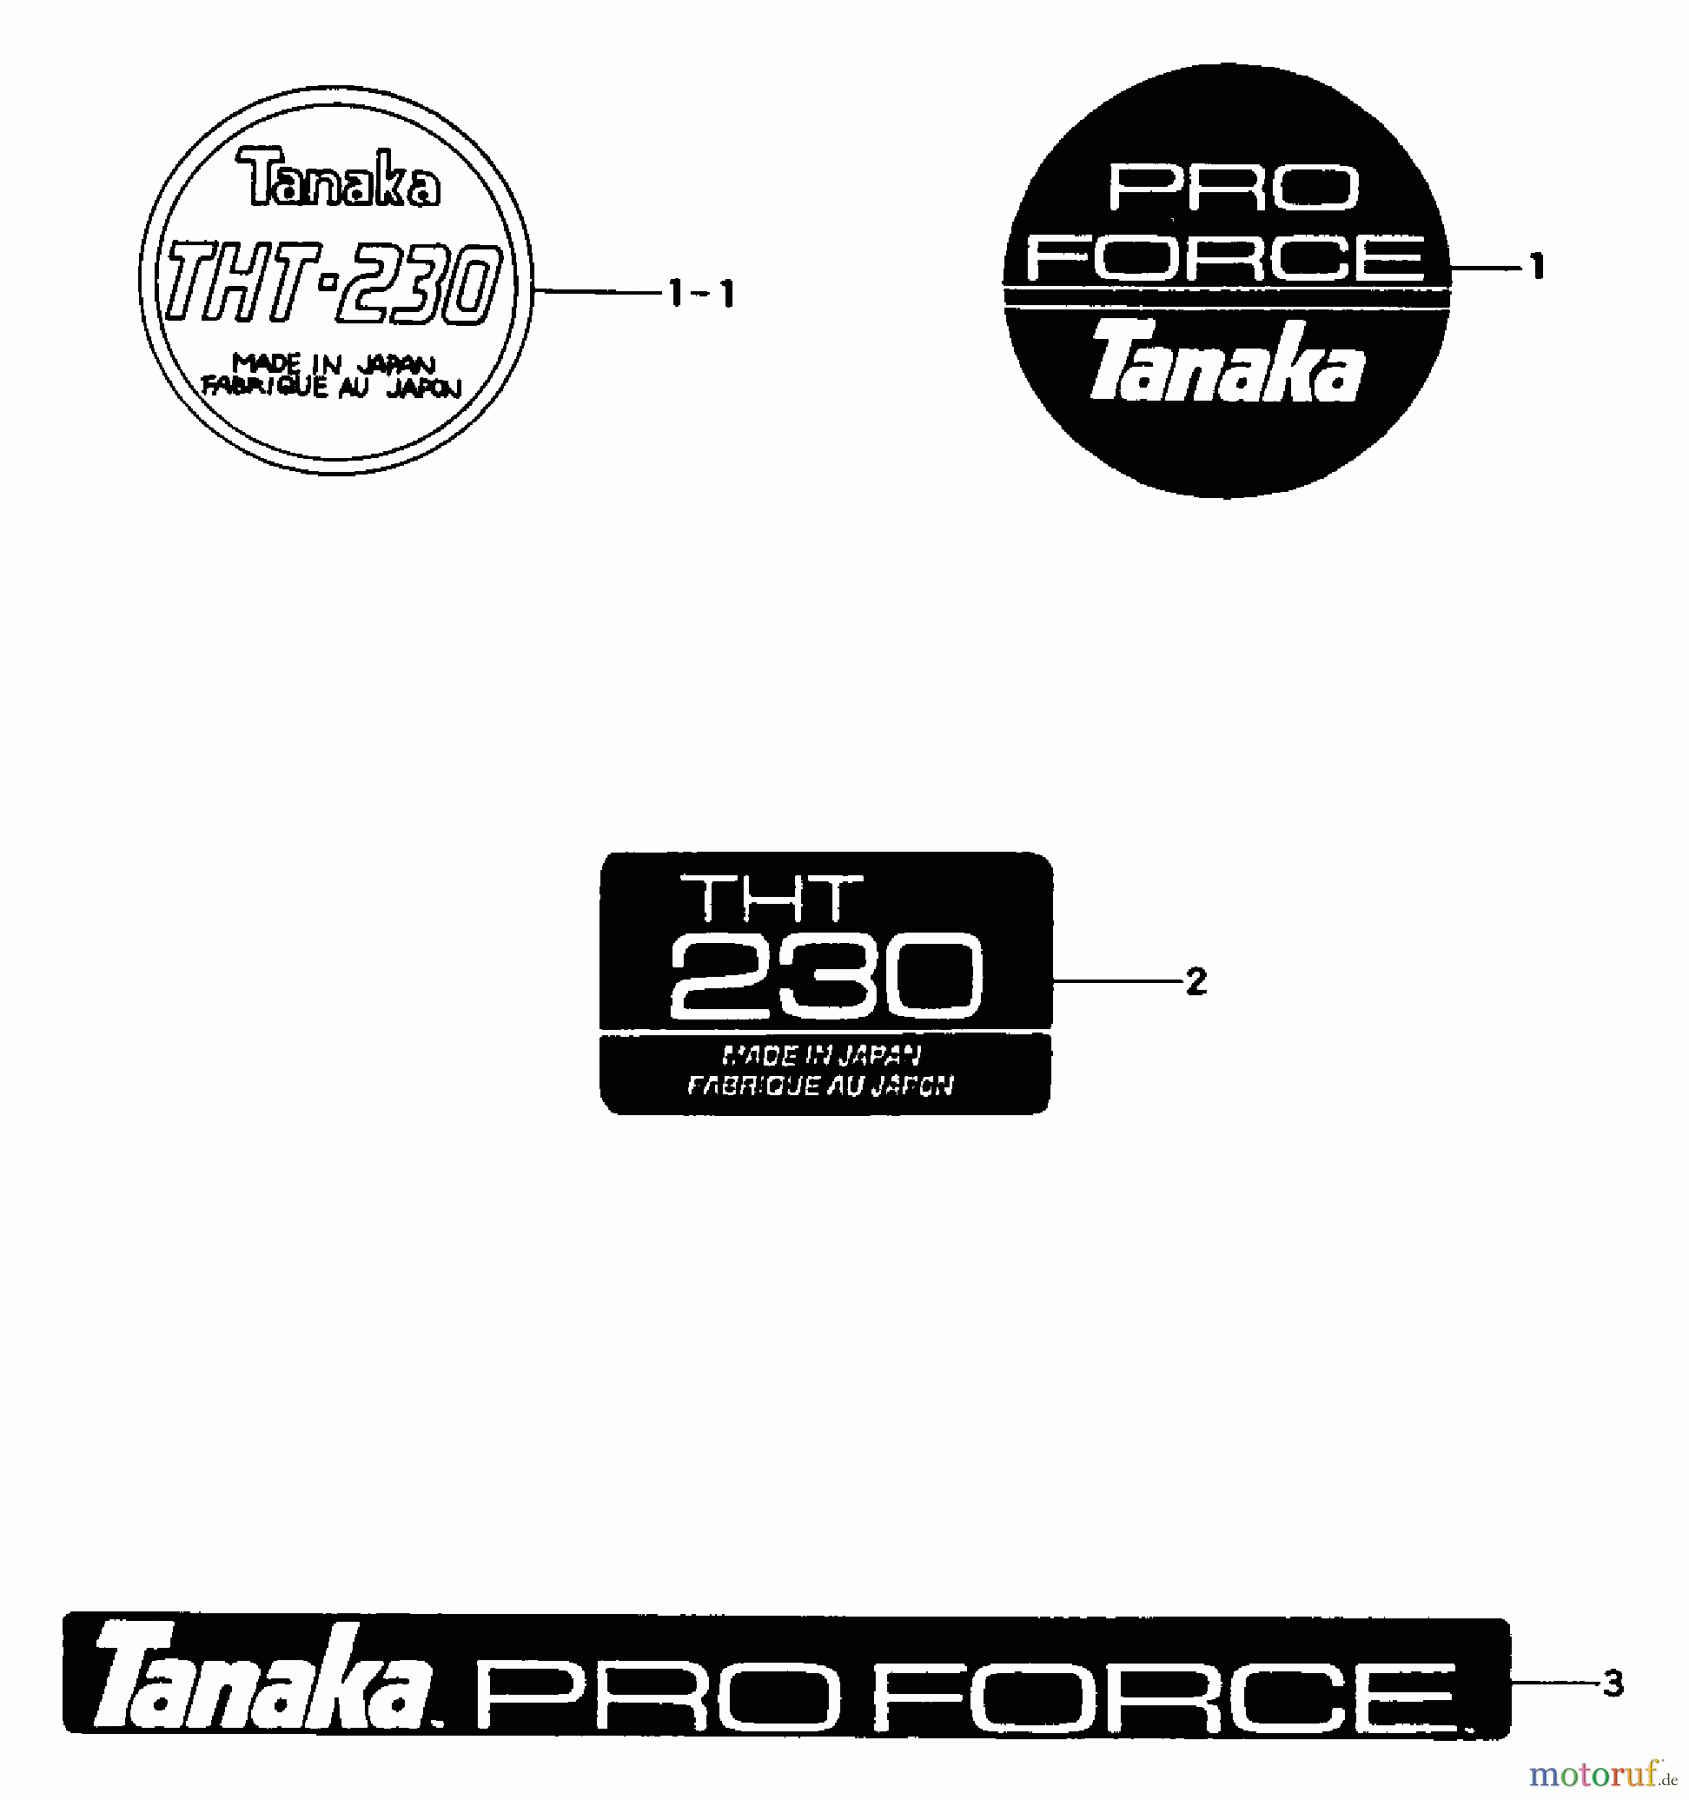  Tanaka Heckenscheeren THT-230 - Tanaka Hedge Trimmer Marks